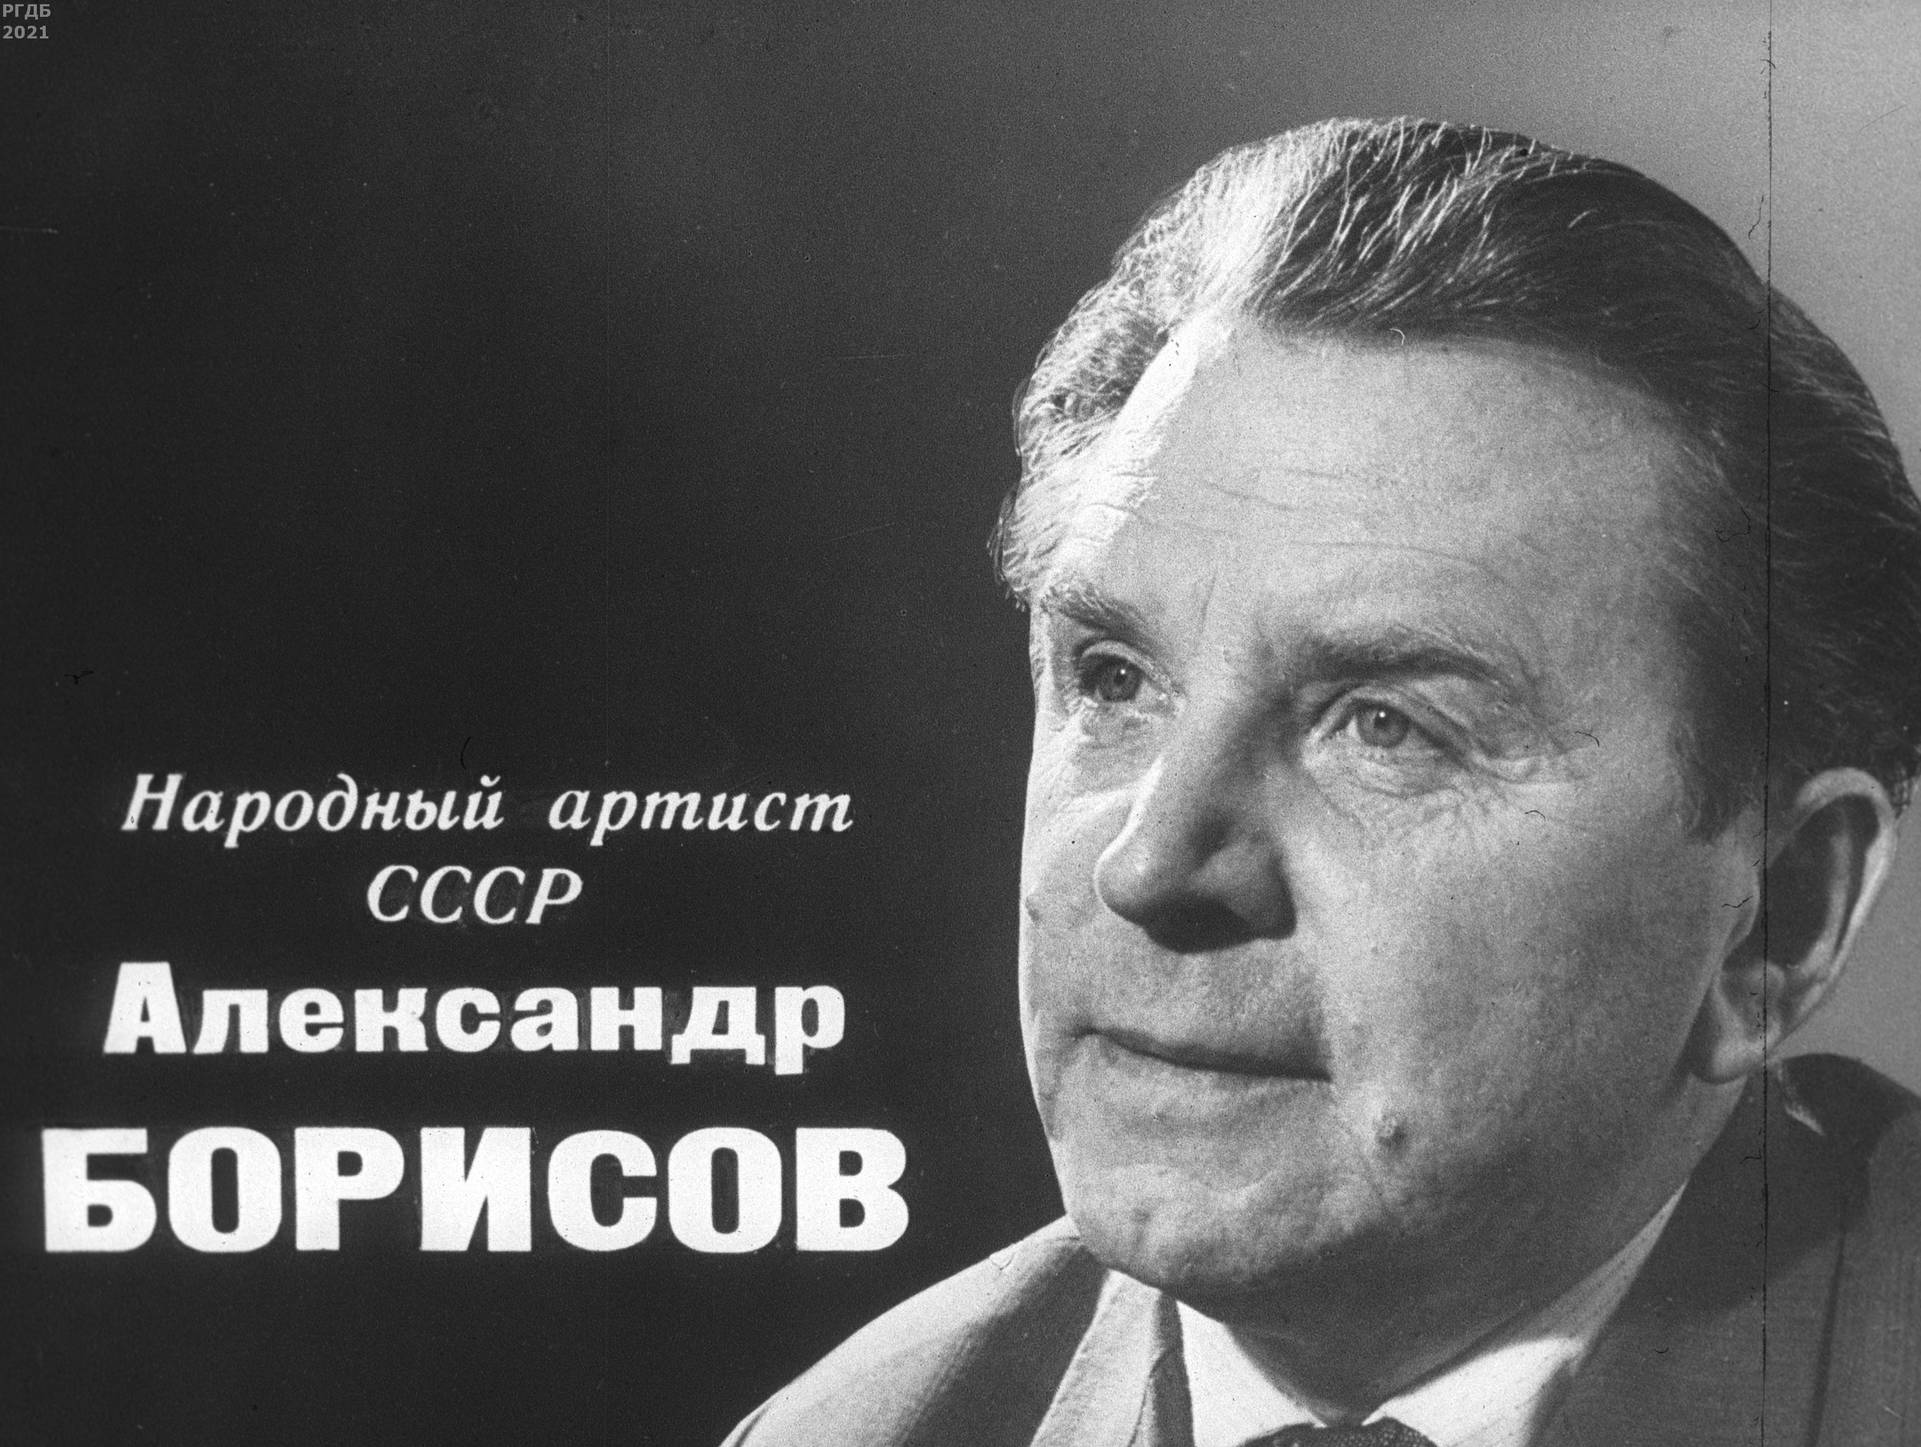 Народный артист СССР Александр Борисов